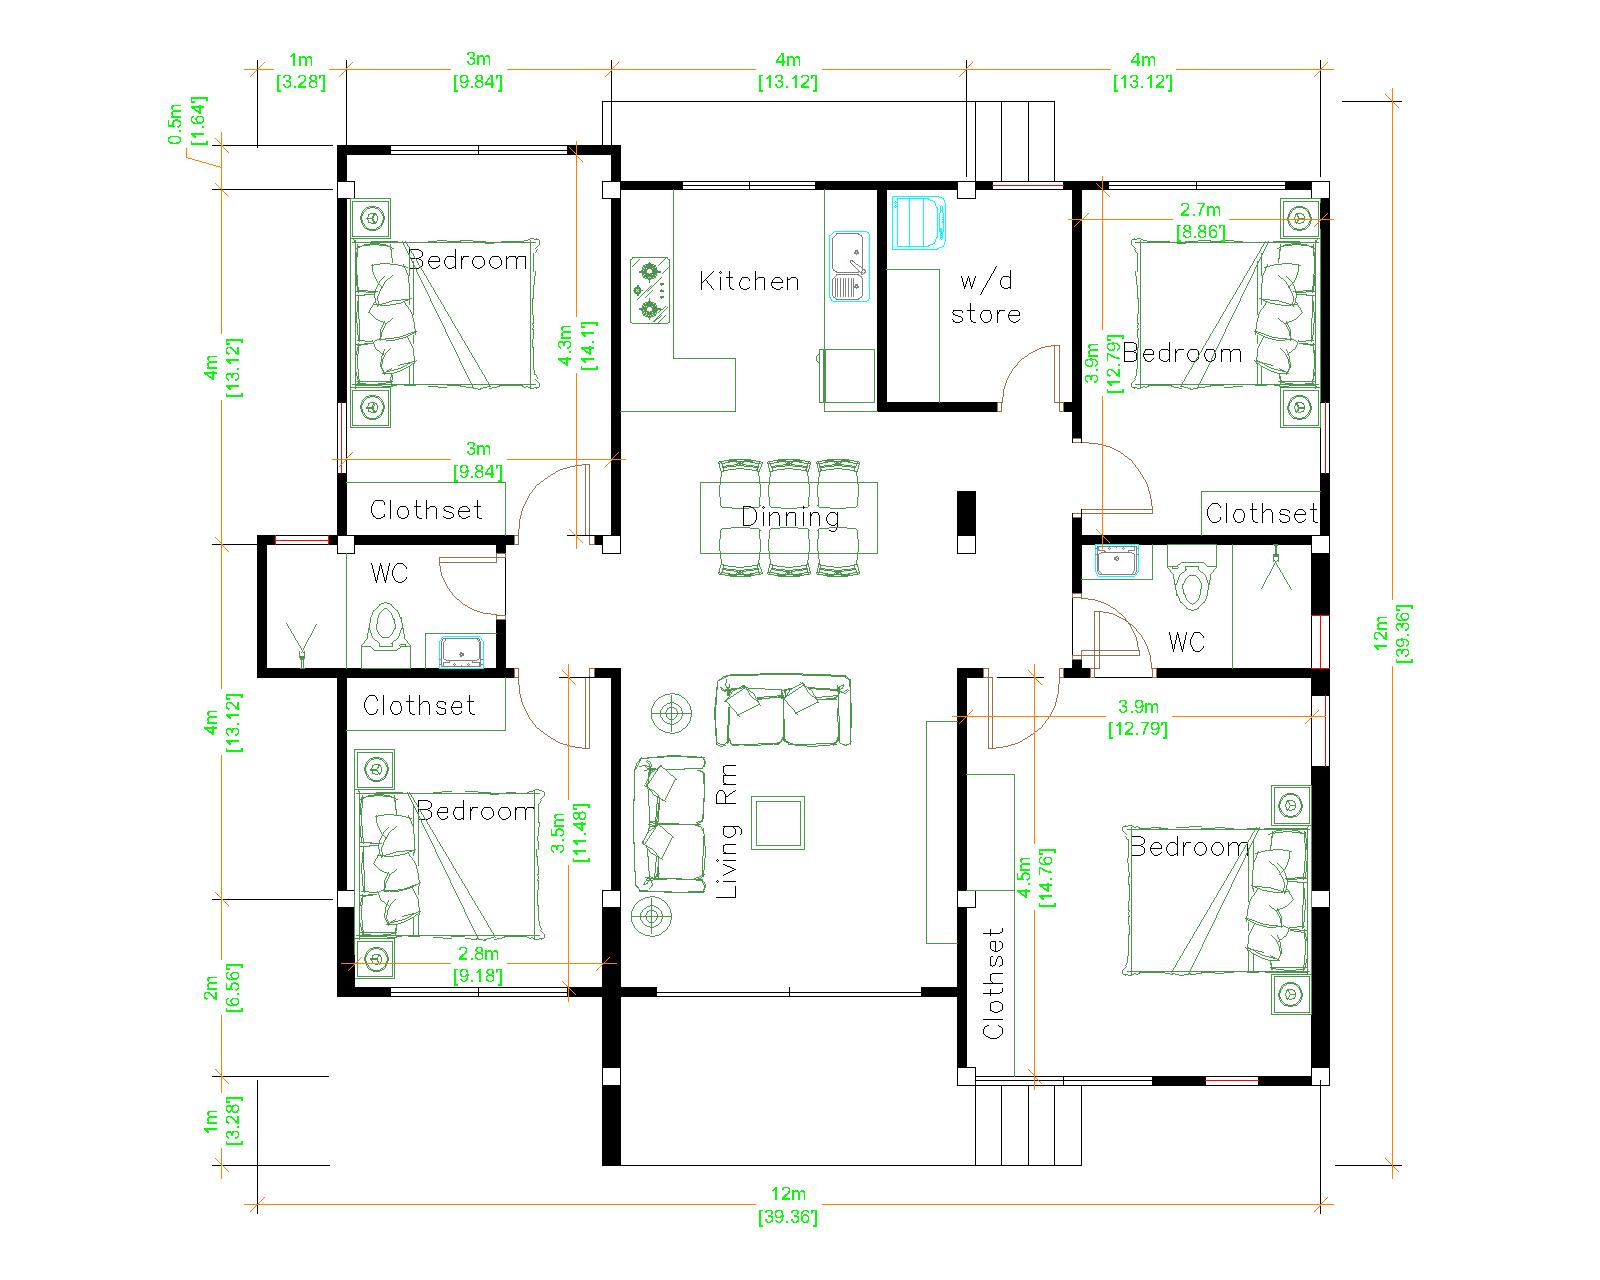 House Design 3d 12x12 Meter 39x39 Feet 4 Bedrooms Gable Roof